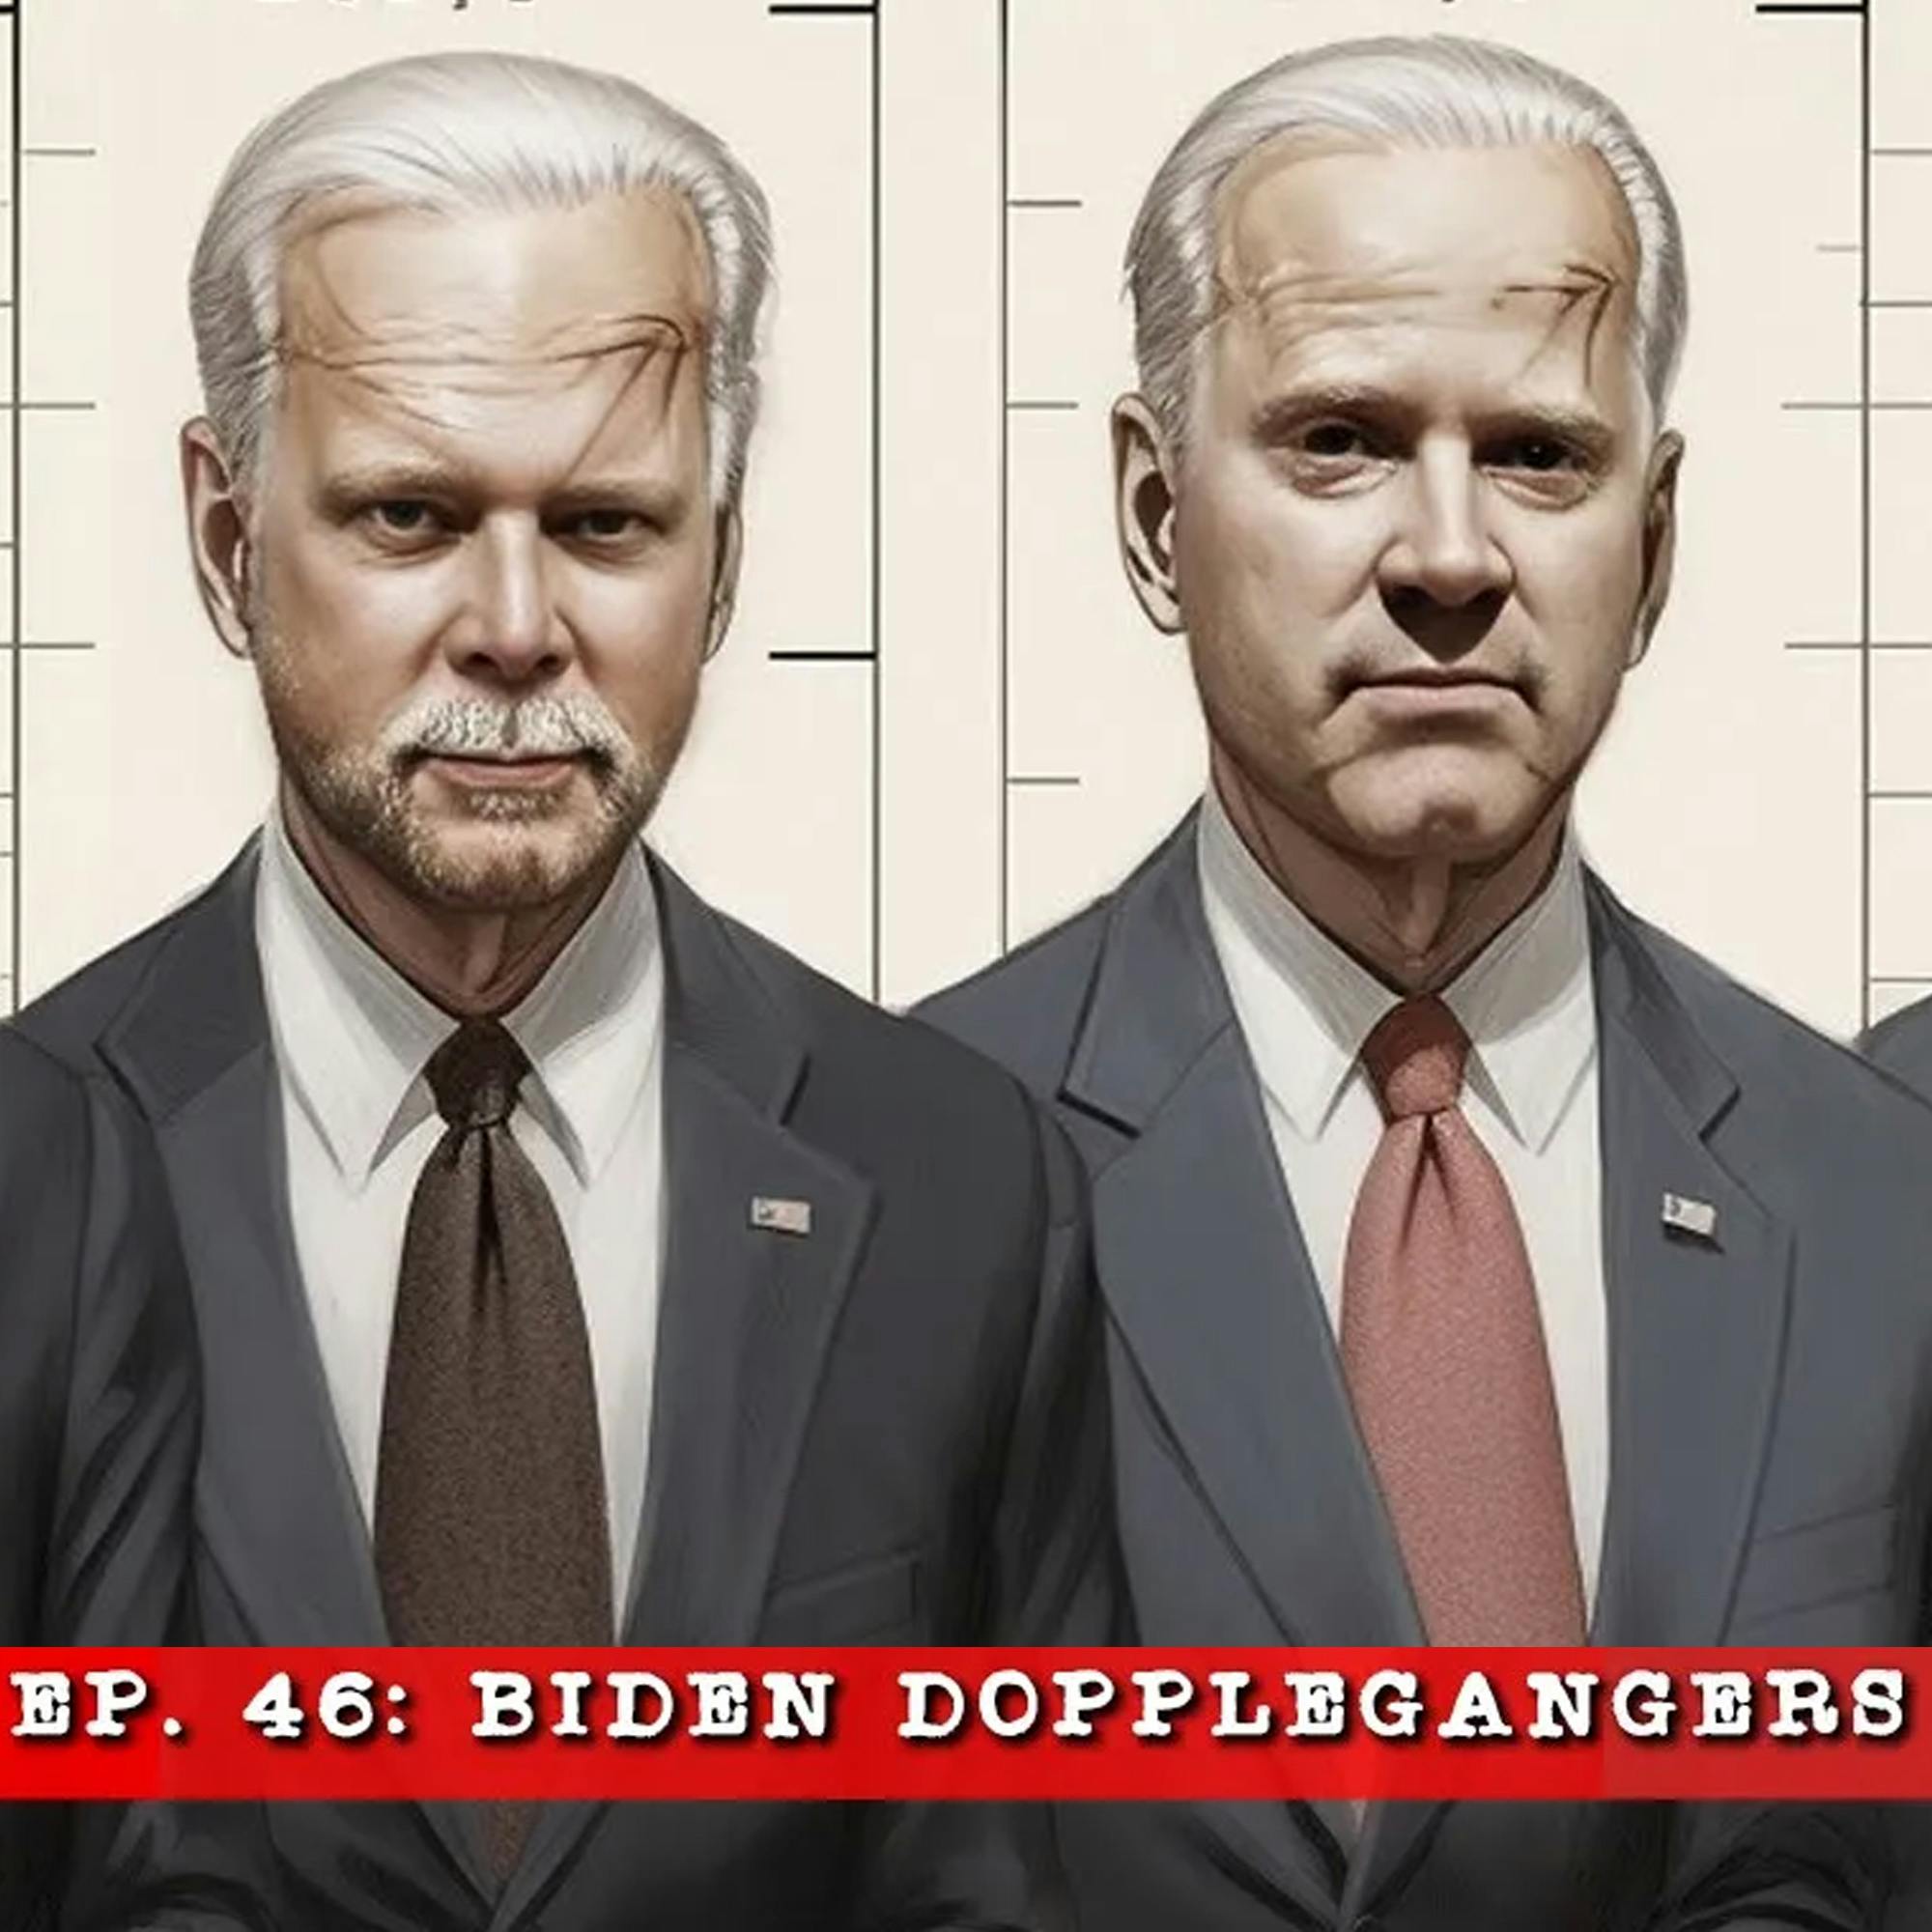 Biden's Doppelgänger?